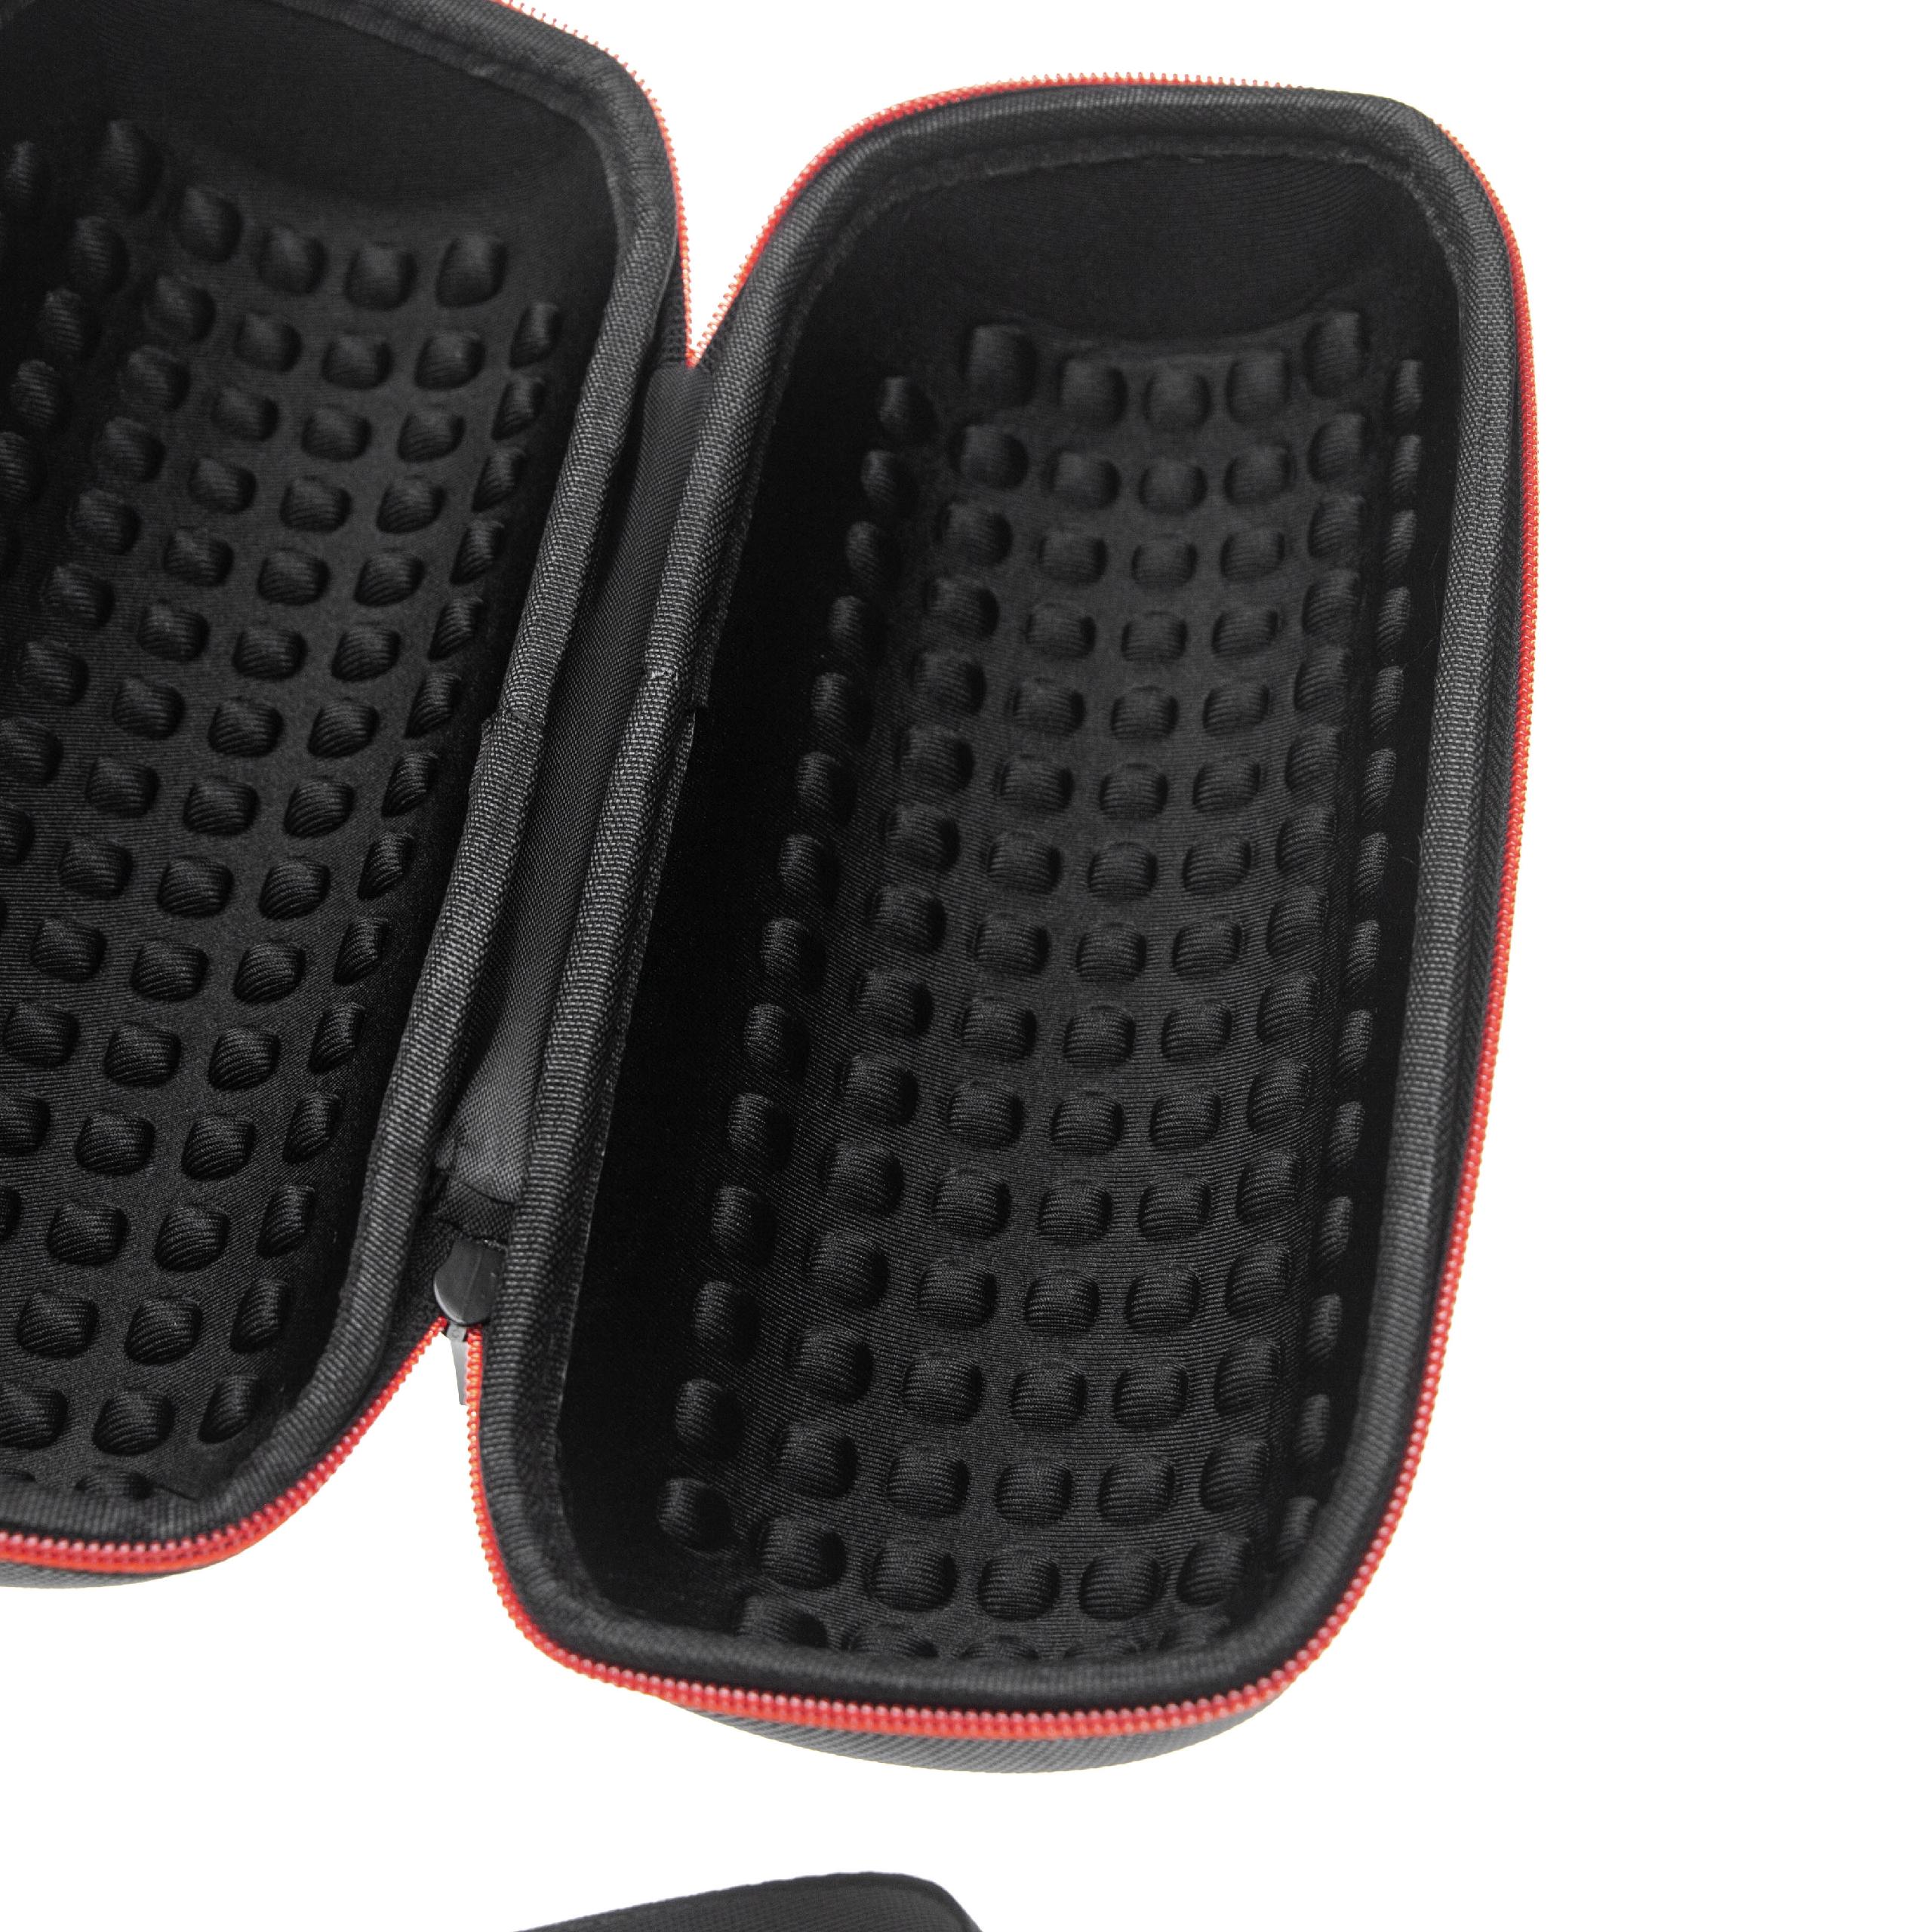 Case suitable for JBL Pulse 4 Loudspeaker - nylon, Black, with Carry Strap